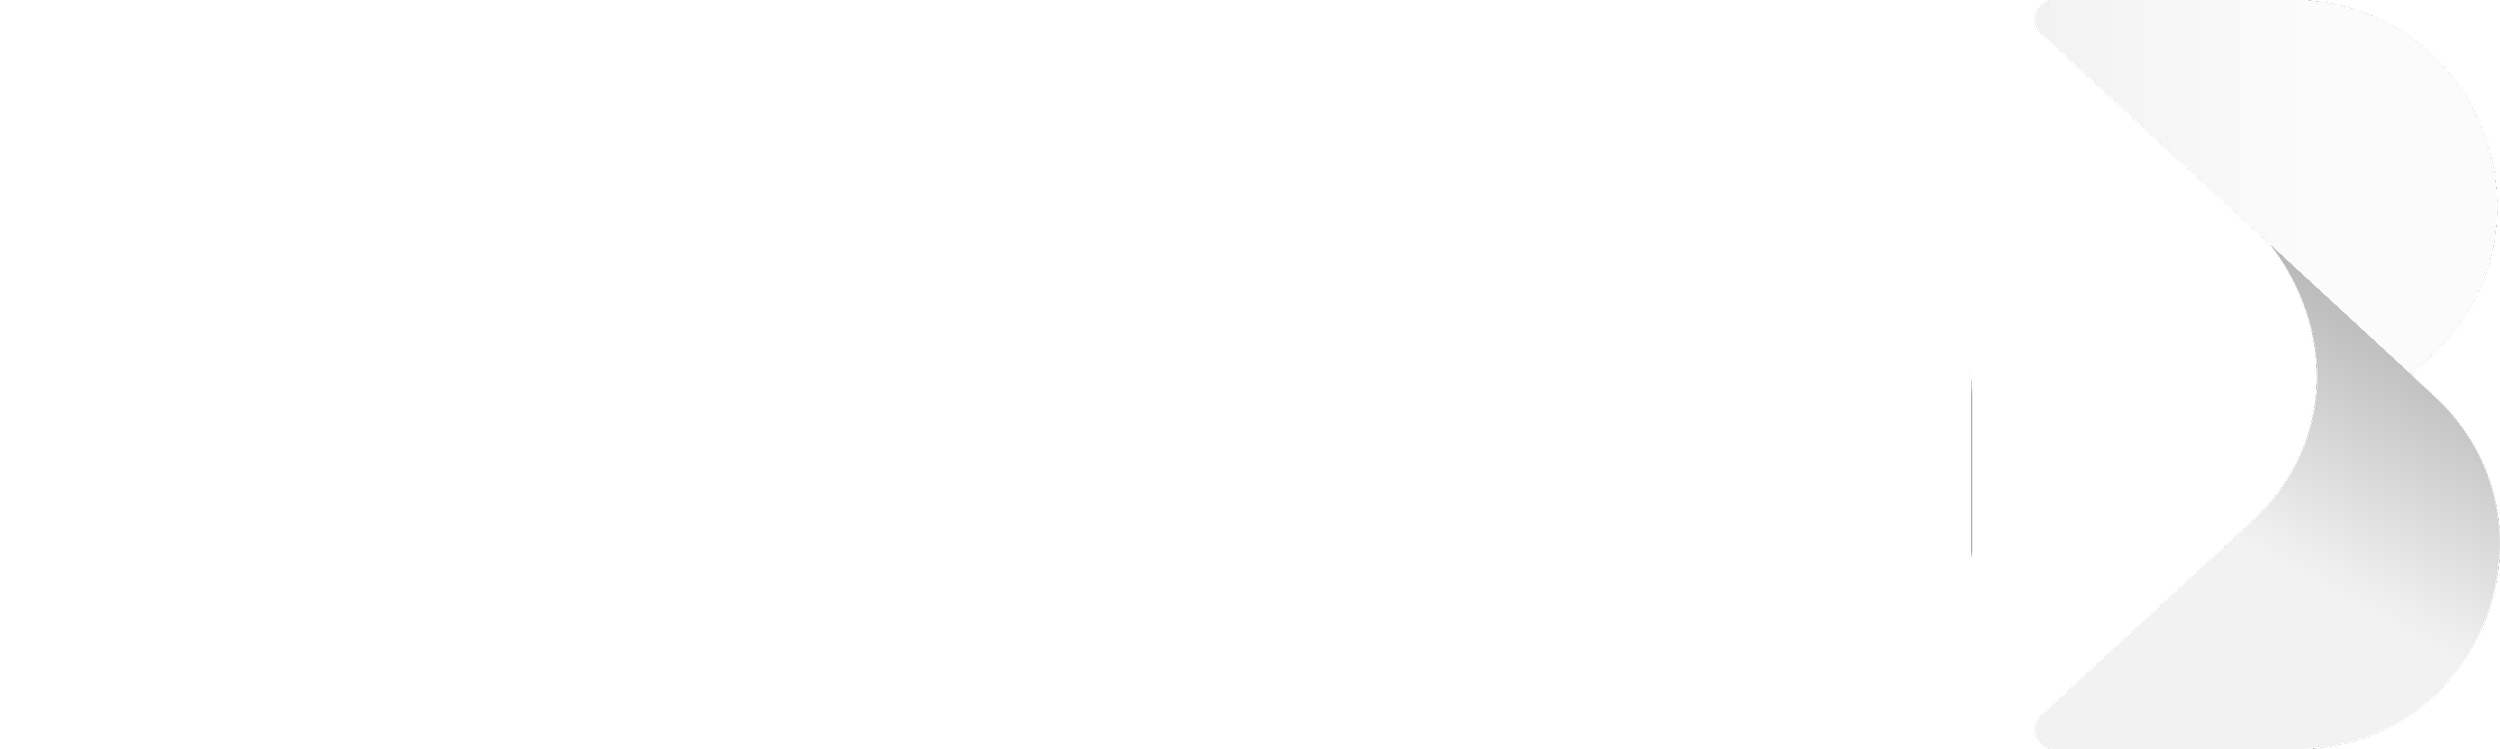 Braskem-Logo.png